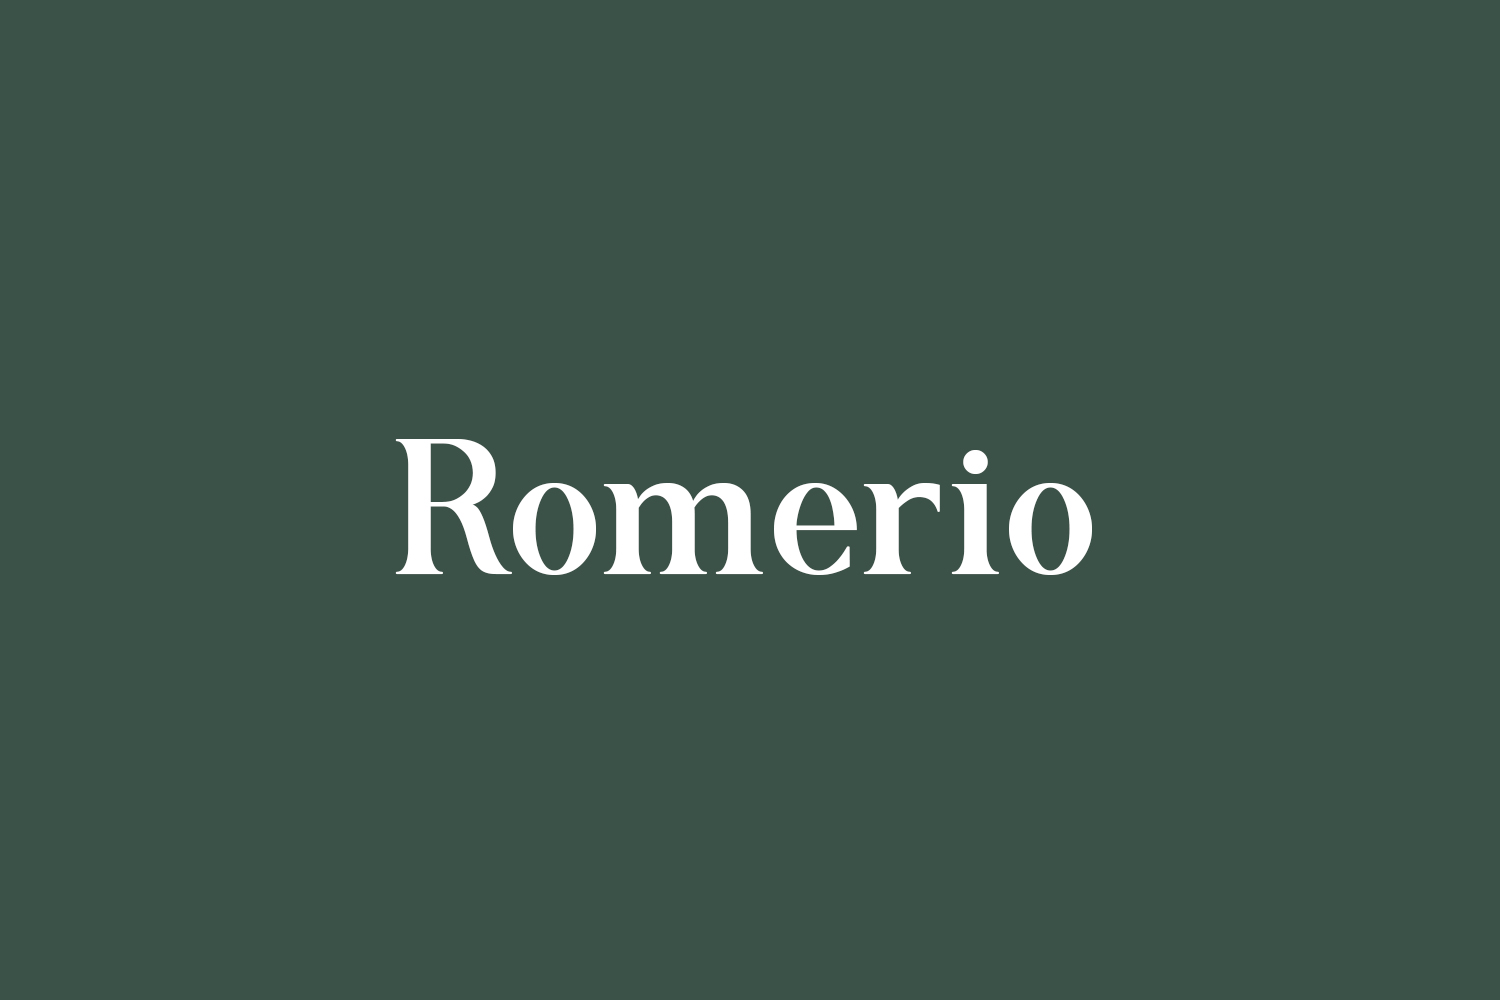 Romerio Free Font